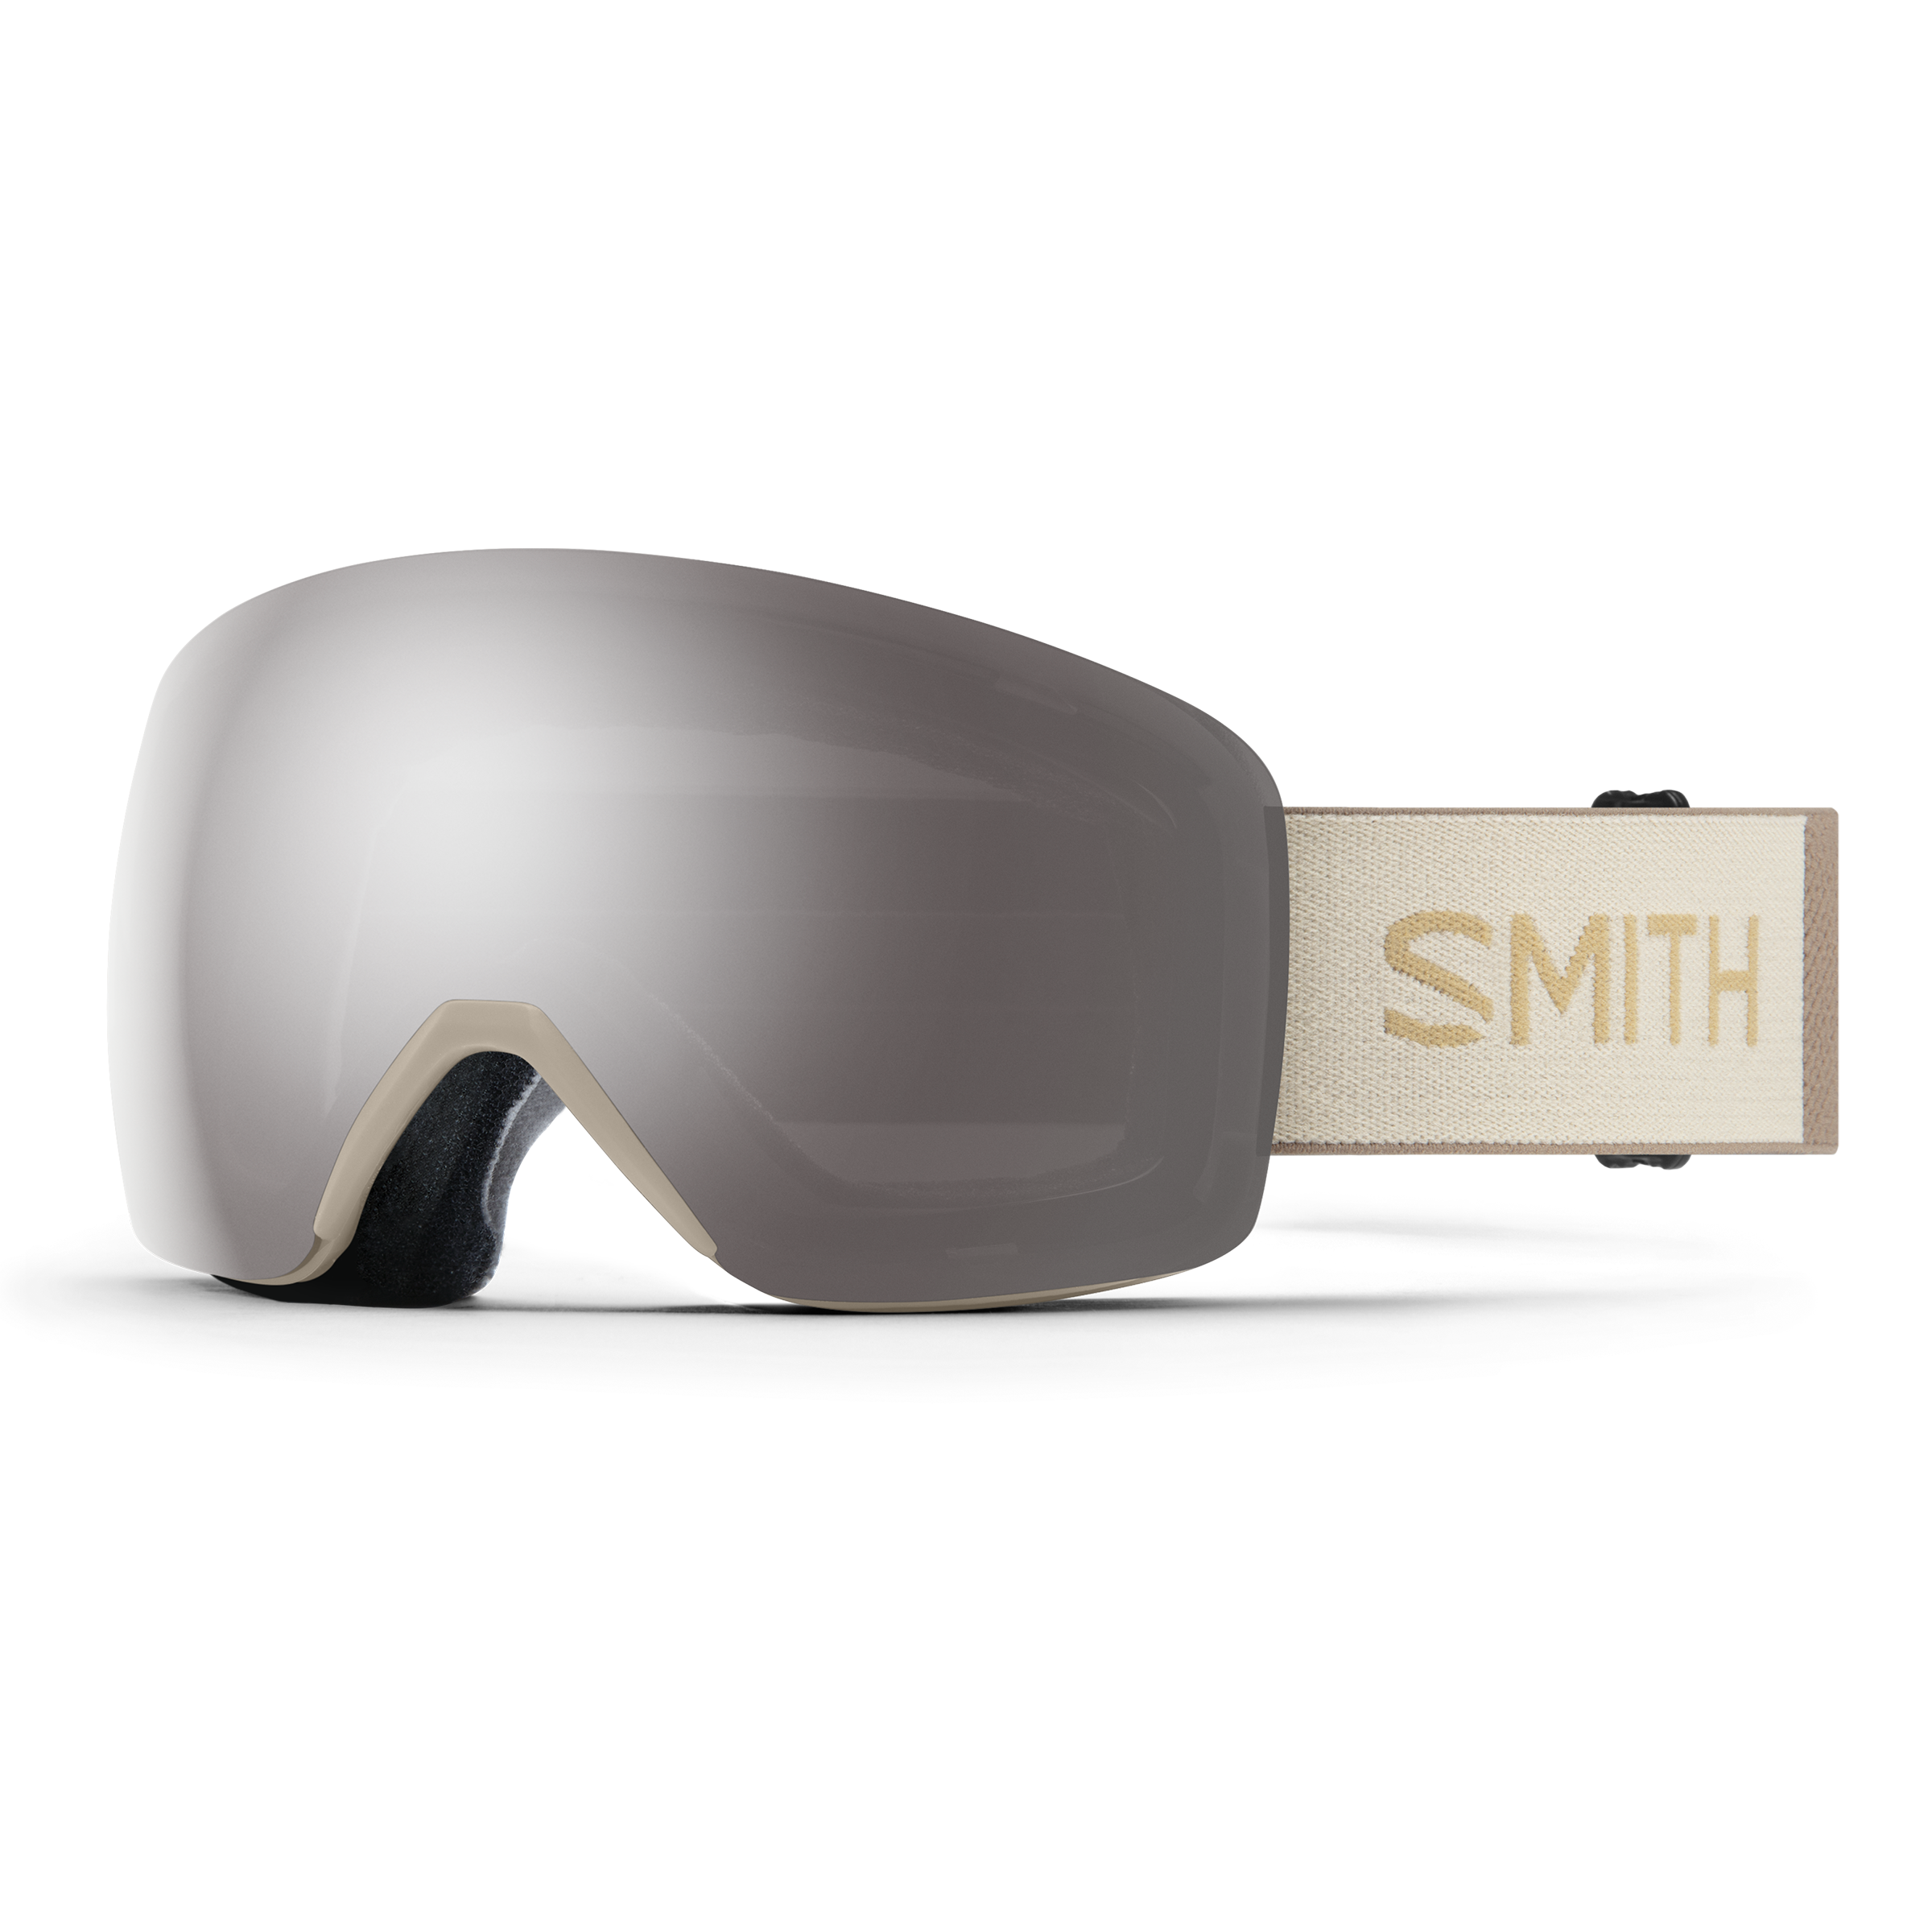 Smith Skyline goggles Red Mirror Chromapop 